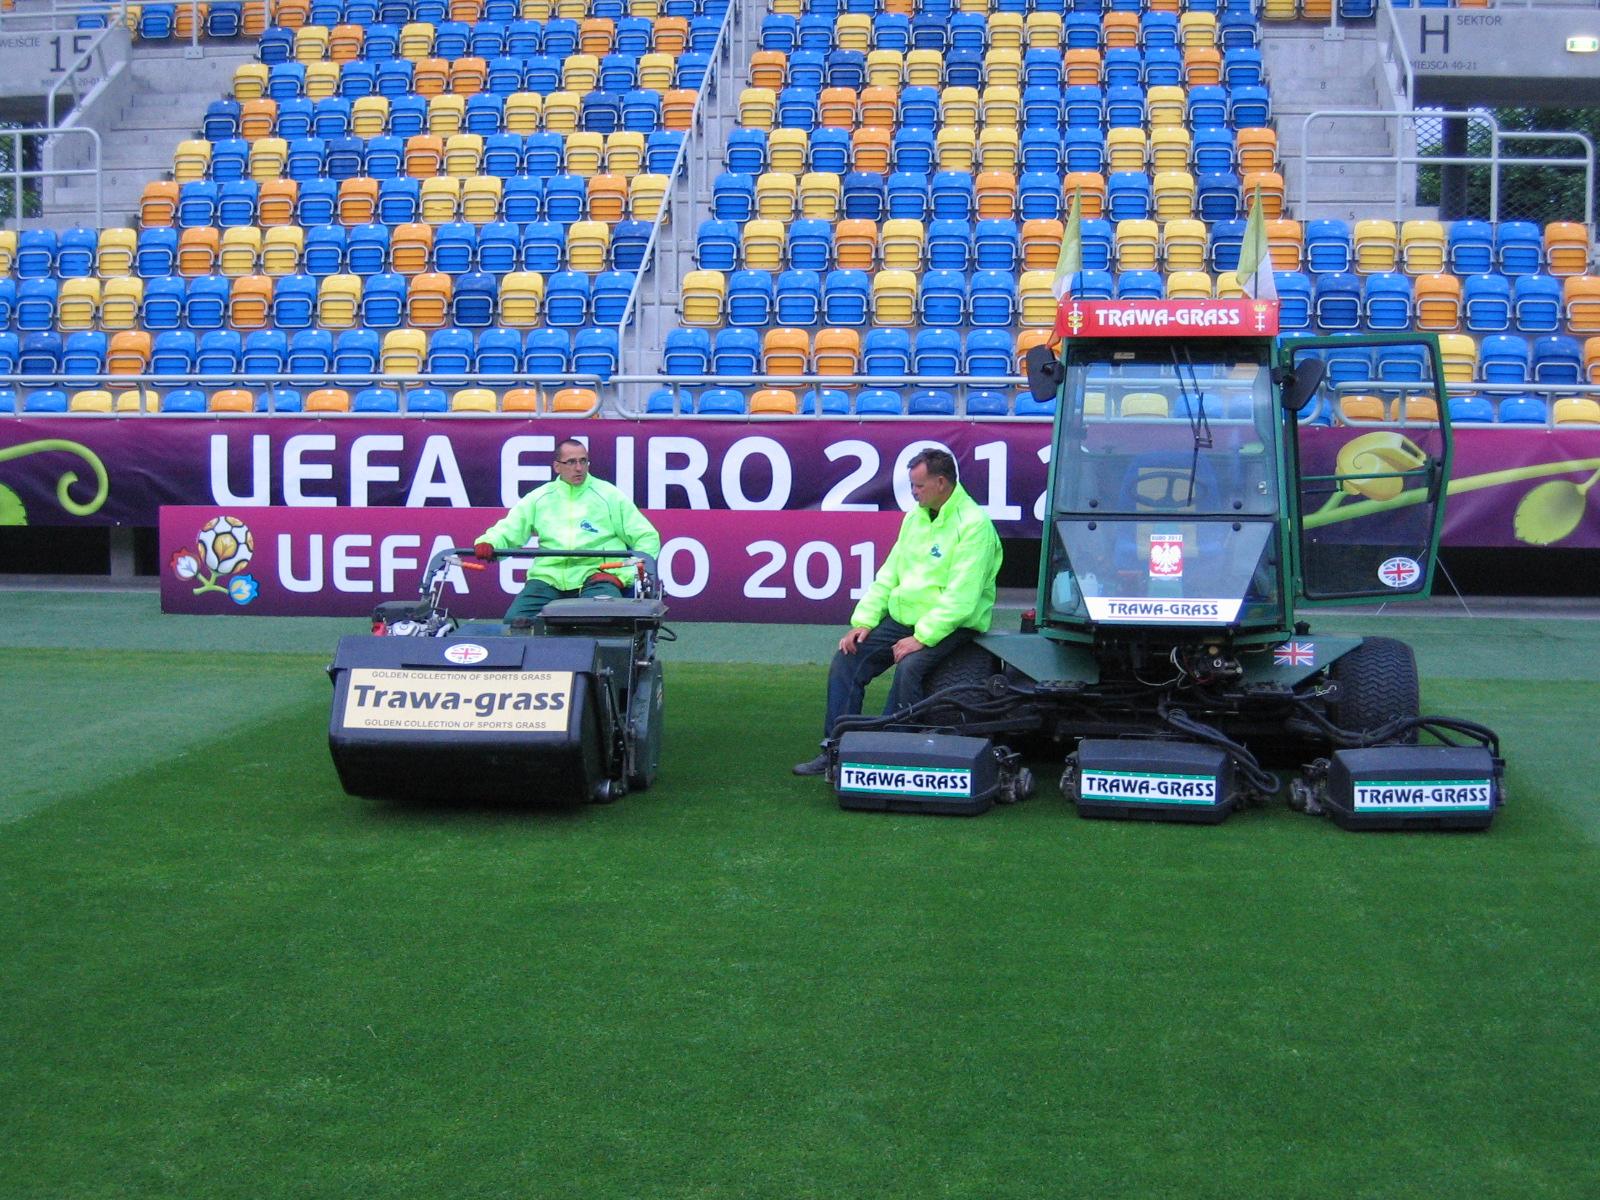 obsługa boisk EURO 2012   TRÓJMIASTO  firma TRAWA-GRASS